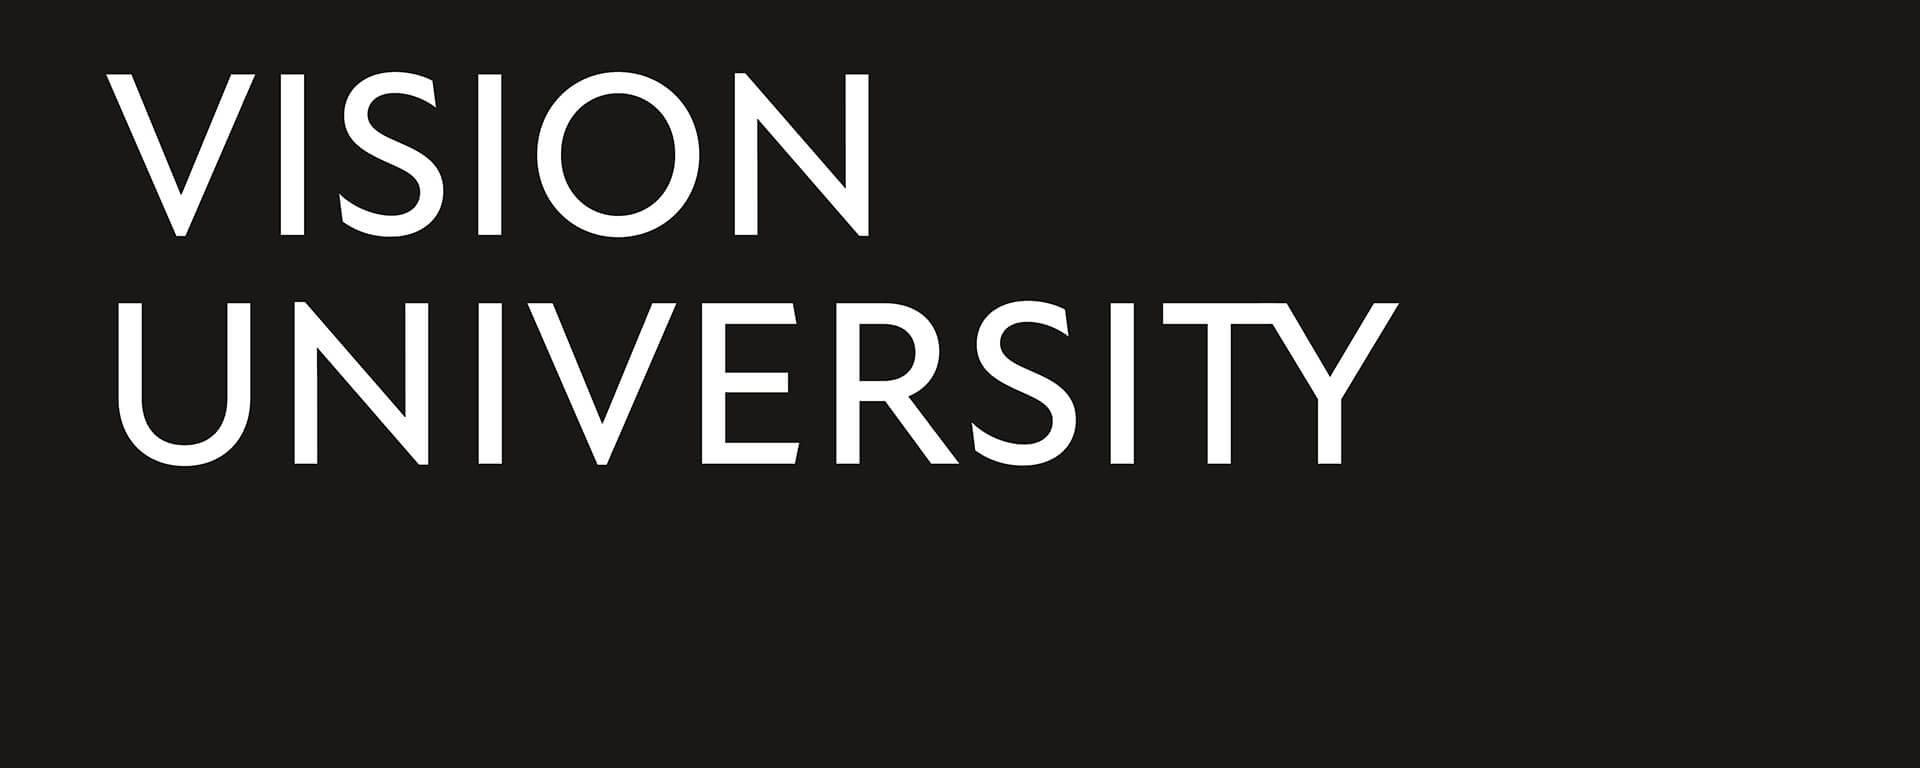 Vision University Brand Standards